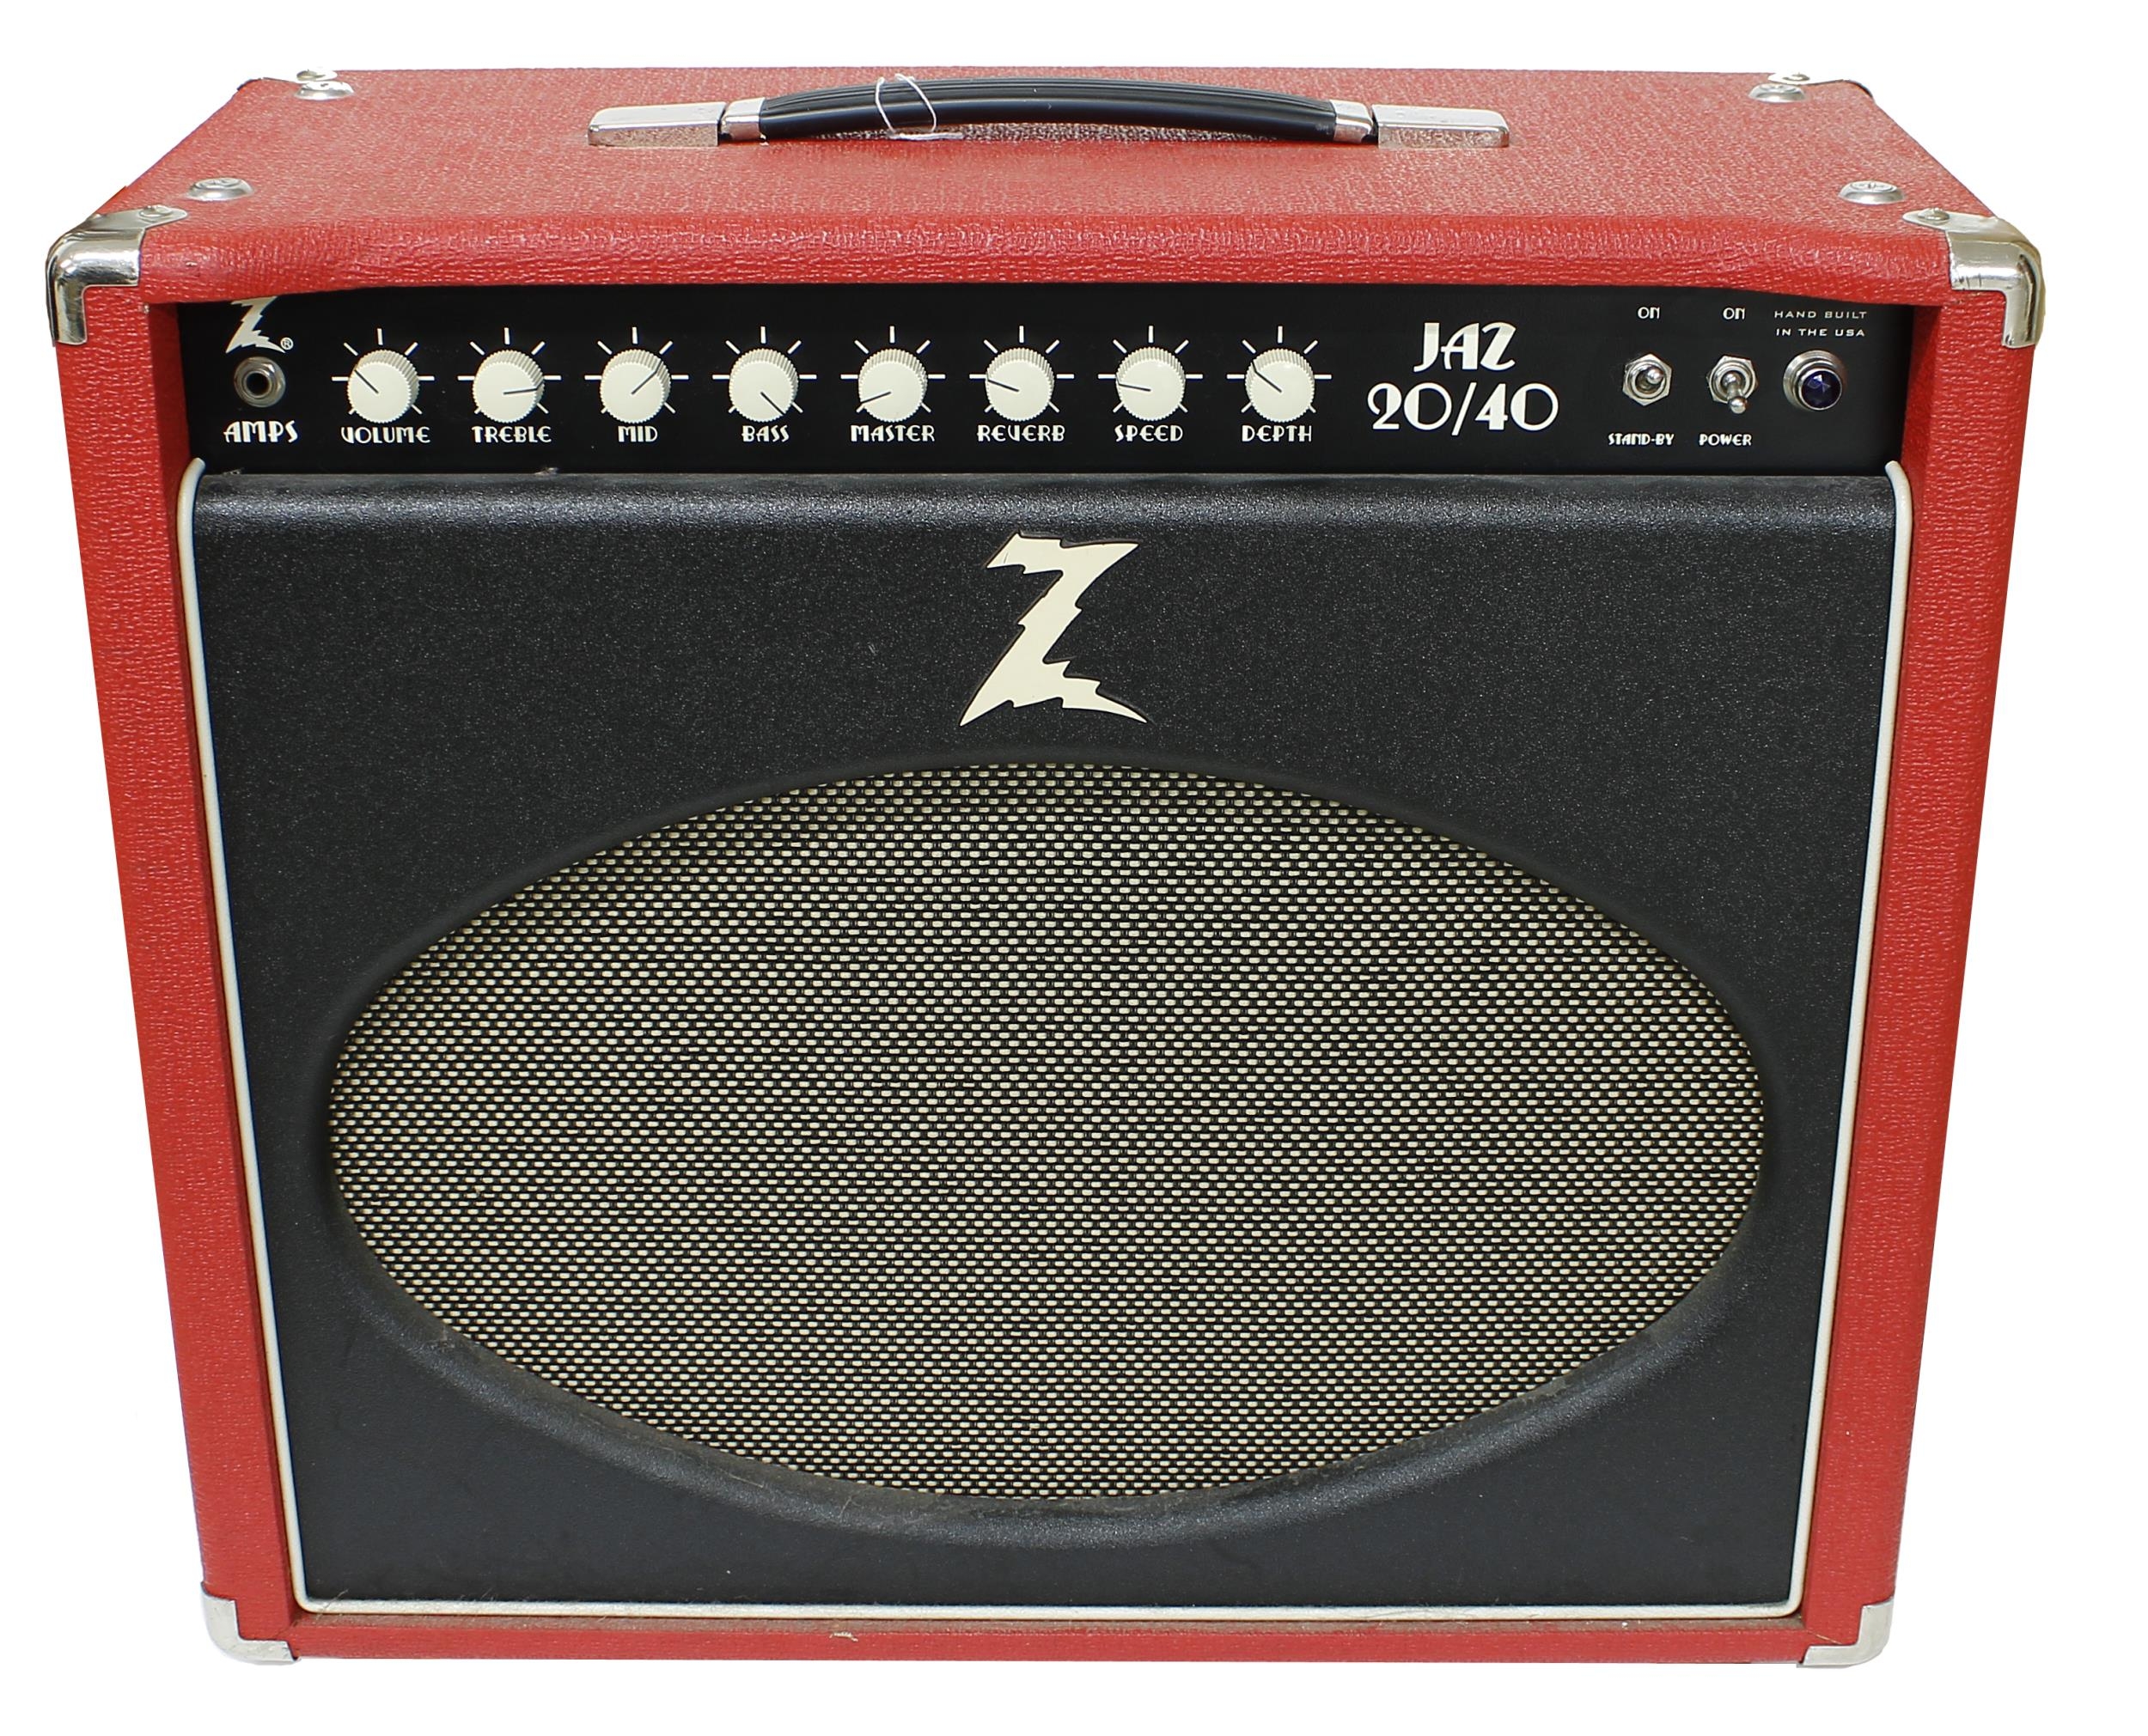 Dr Z Jaz 20/40 guitar amplifier 2 x 12 combo, made in USA, ser. no. T2909